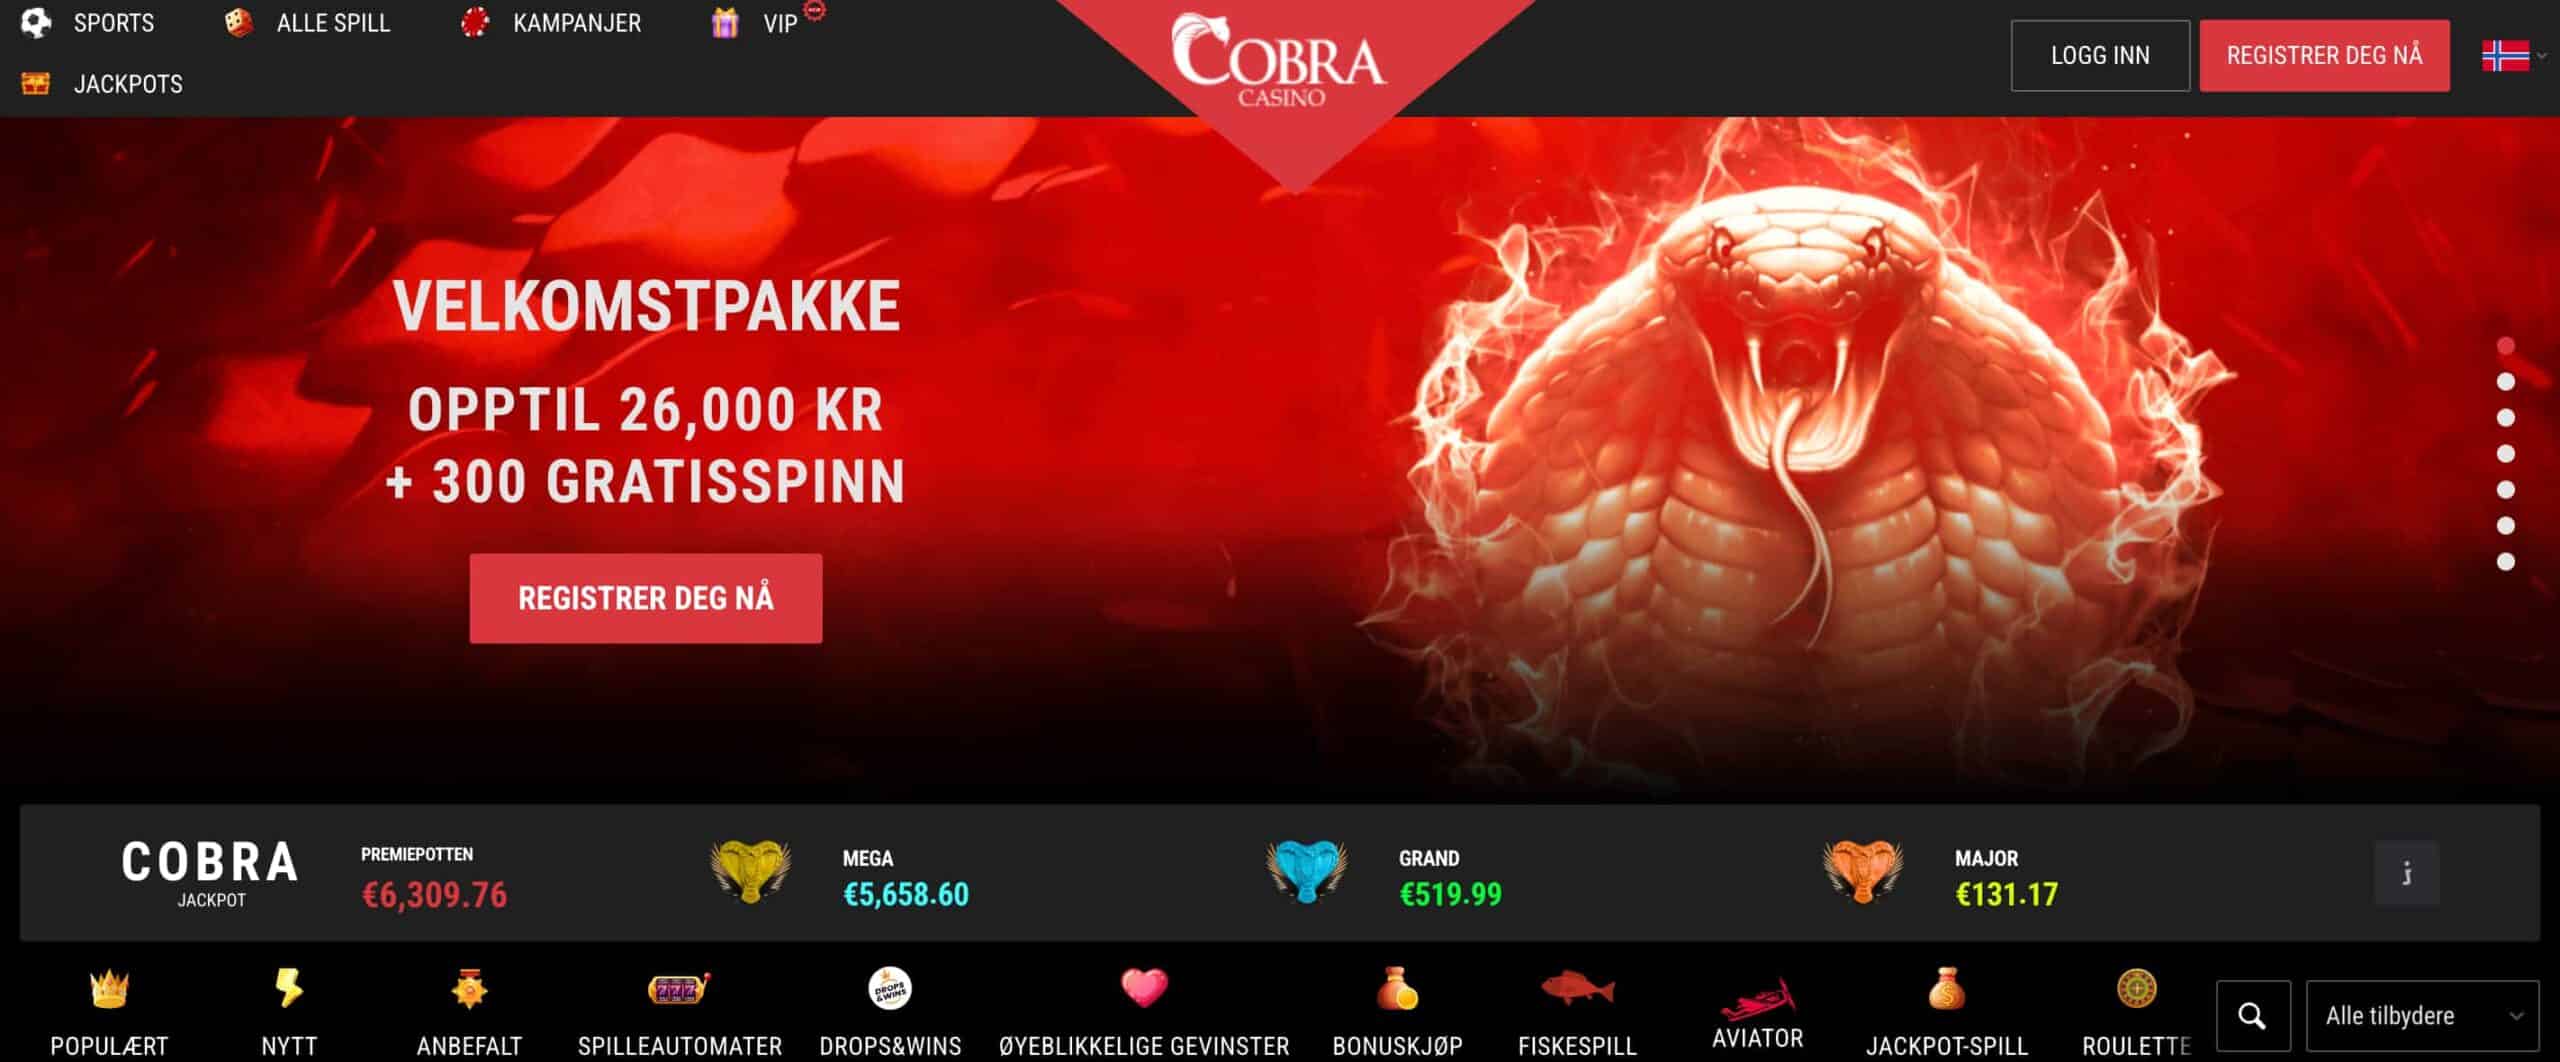 Cobra casino